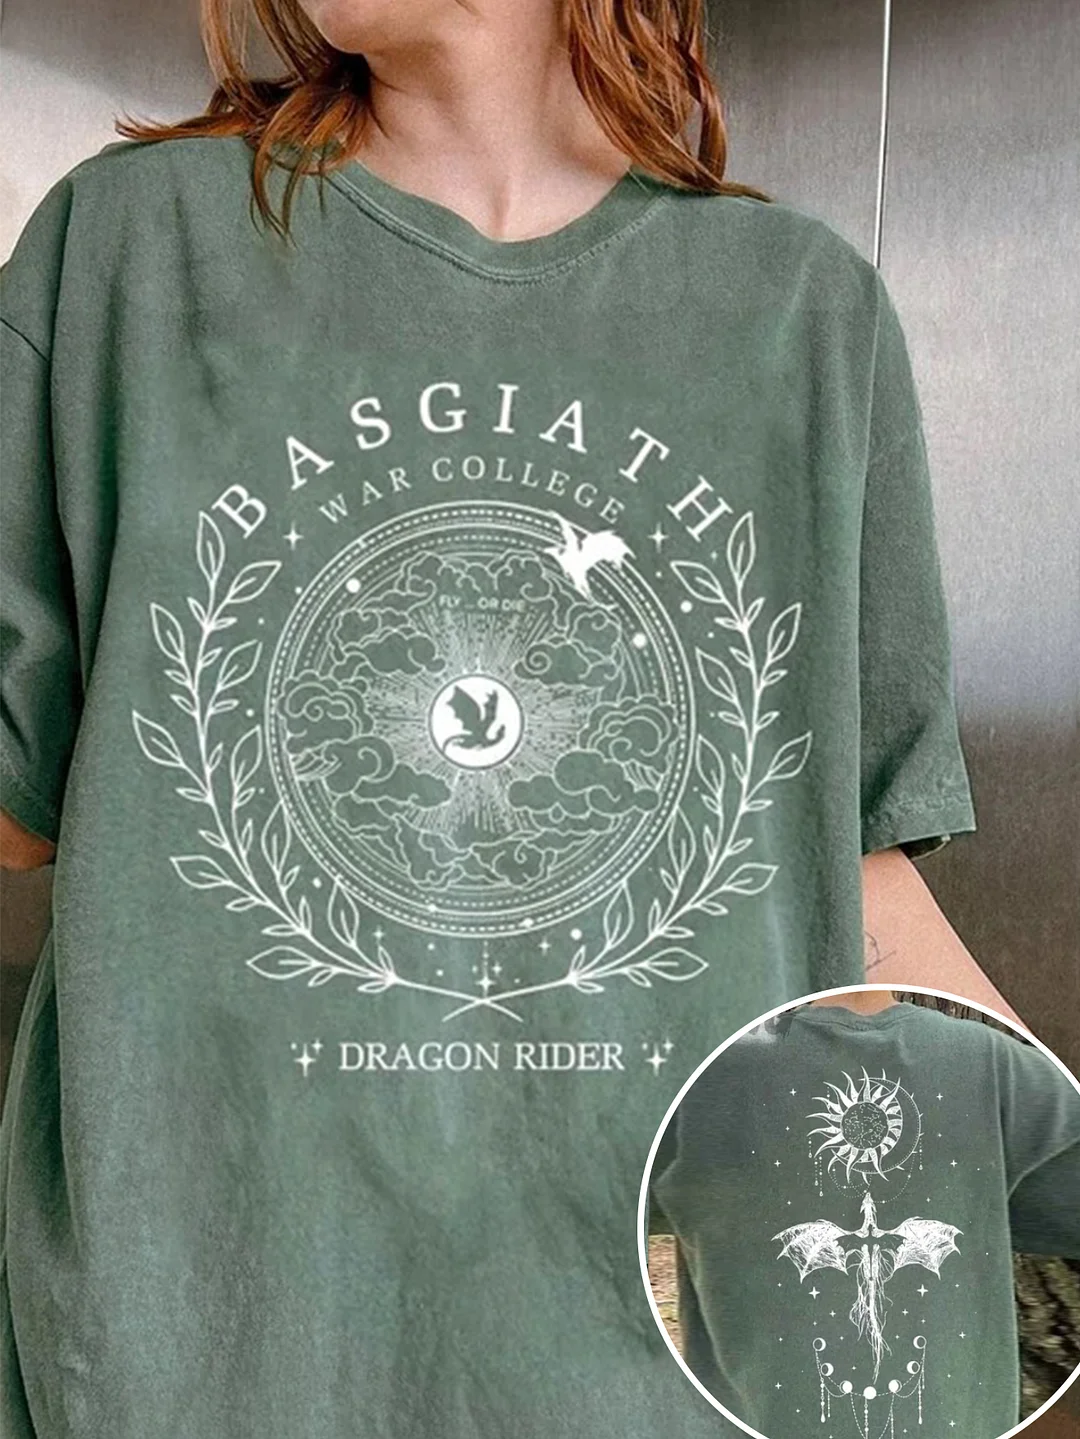 Basgiath War College Double-sided Printed T-shirt / DarkAcademias /Darkacademias